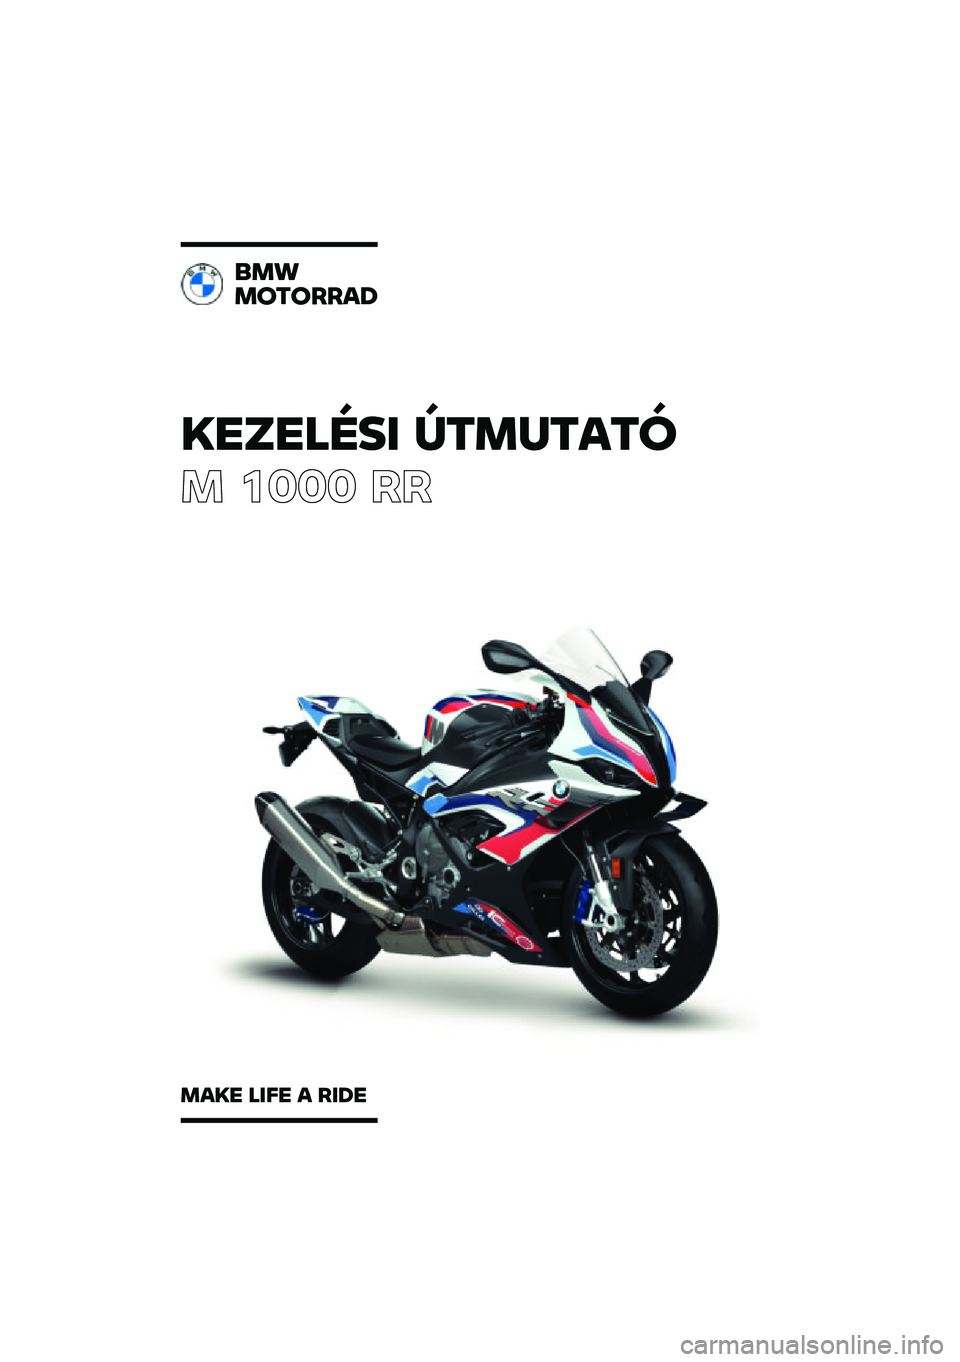 BMW MOTORRAD M 1000 RR 2021  Kezelési útmutató (in Hungarian) �������\b�	 �
�\f�
��\f��\f�
� ���� ��
��
�
�
��\f�����
�
��� ��	�� � ��	�� 